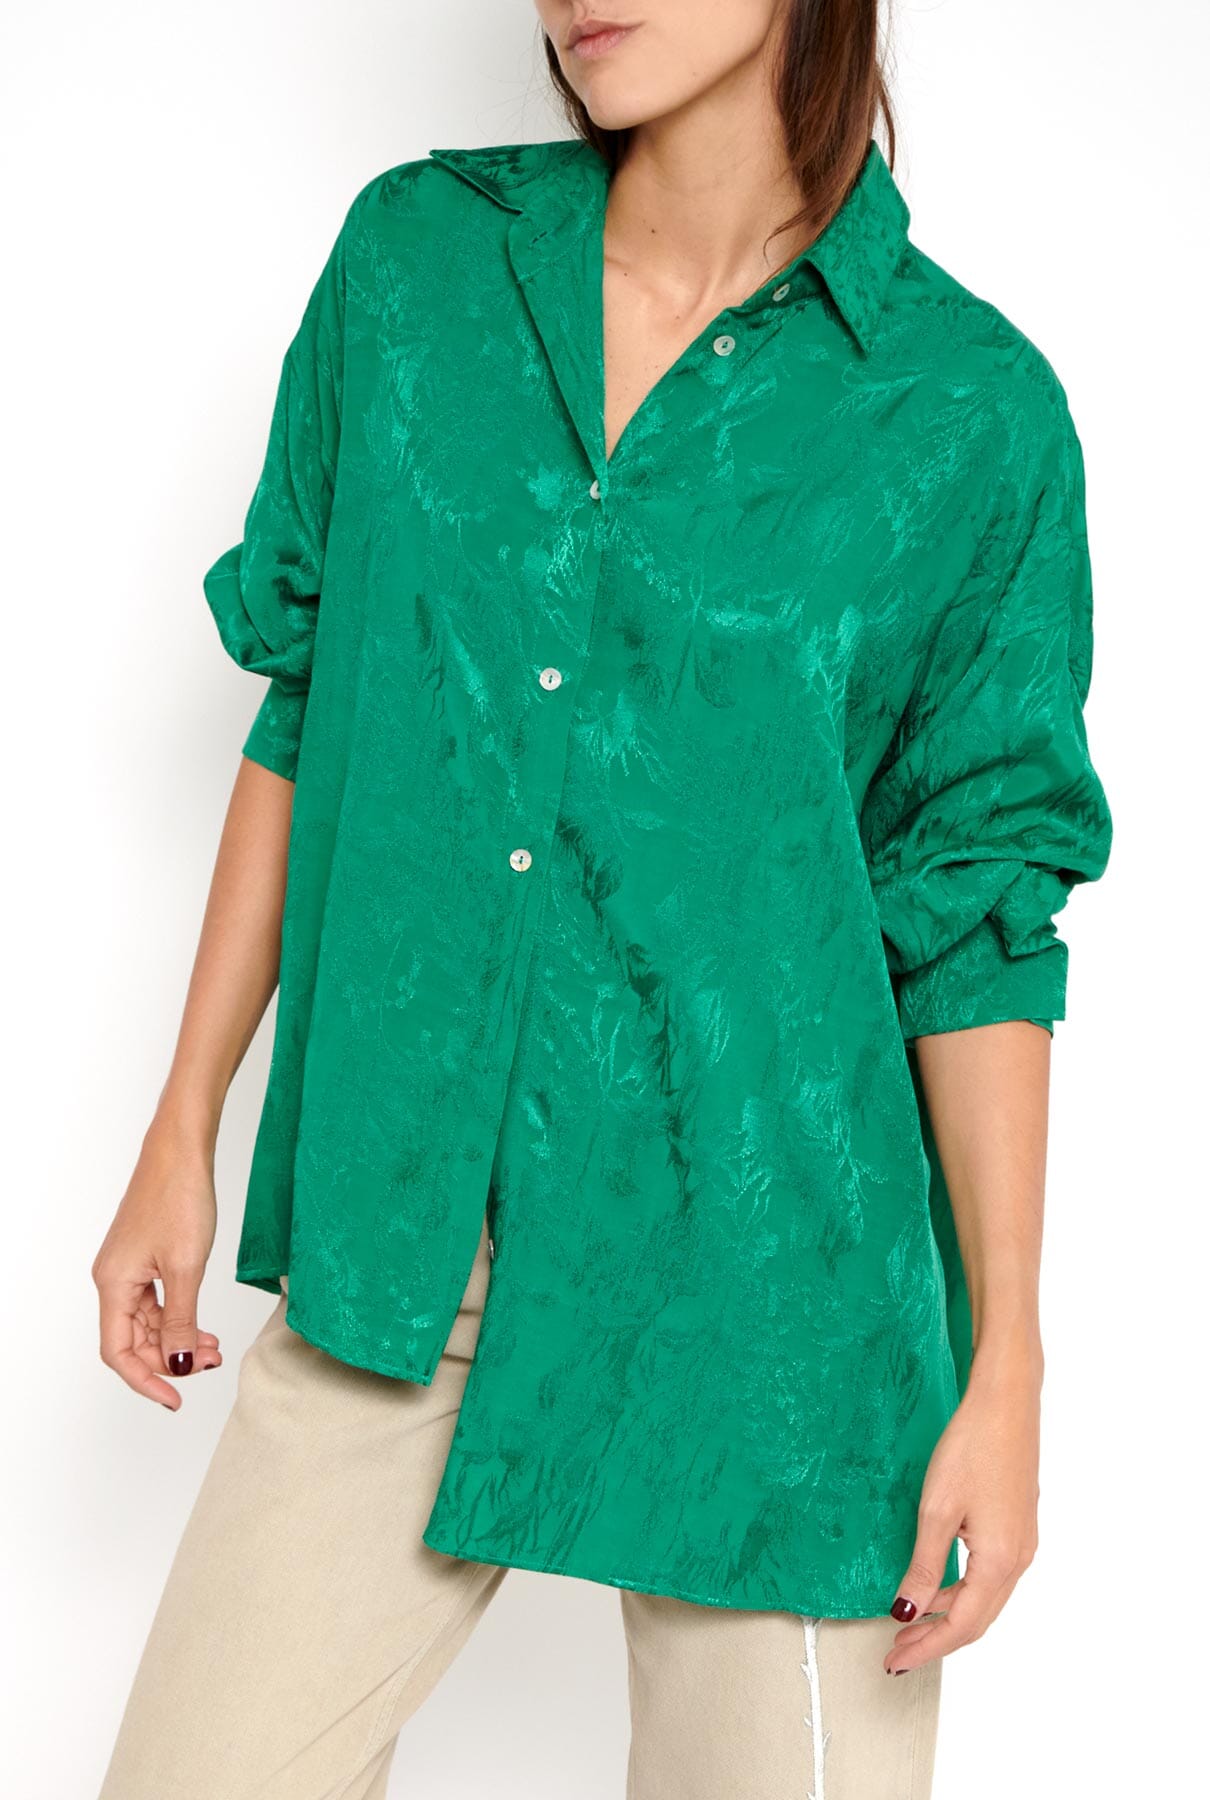 Camisa Dos verde Shirts & blouses Mina 